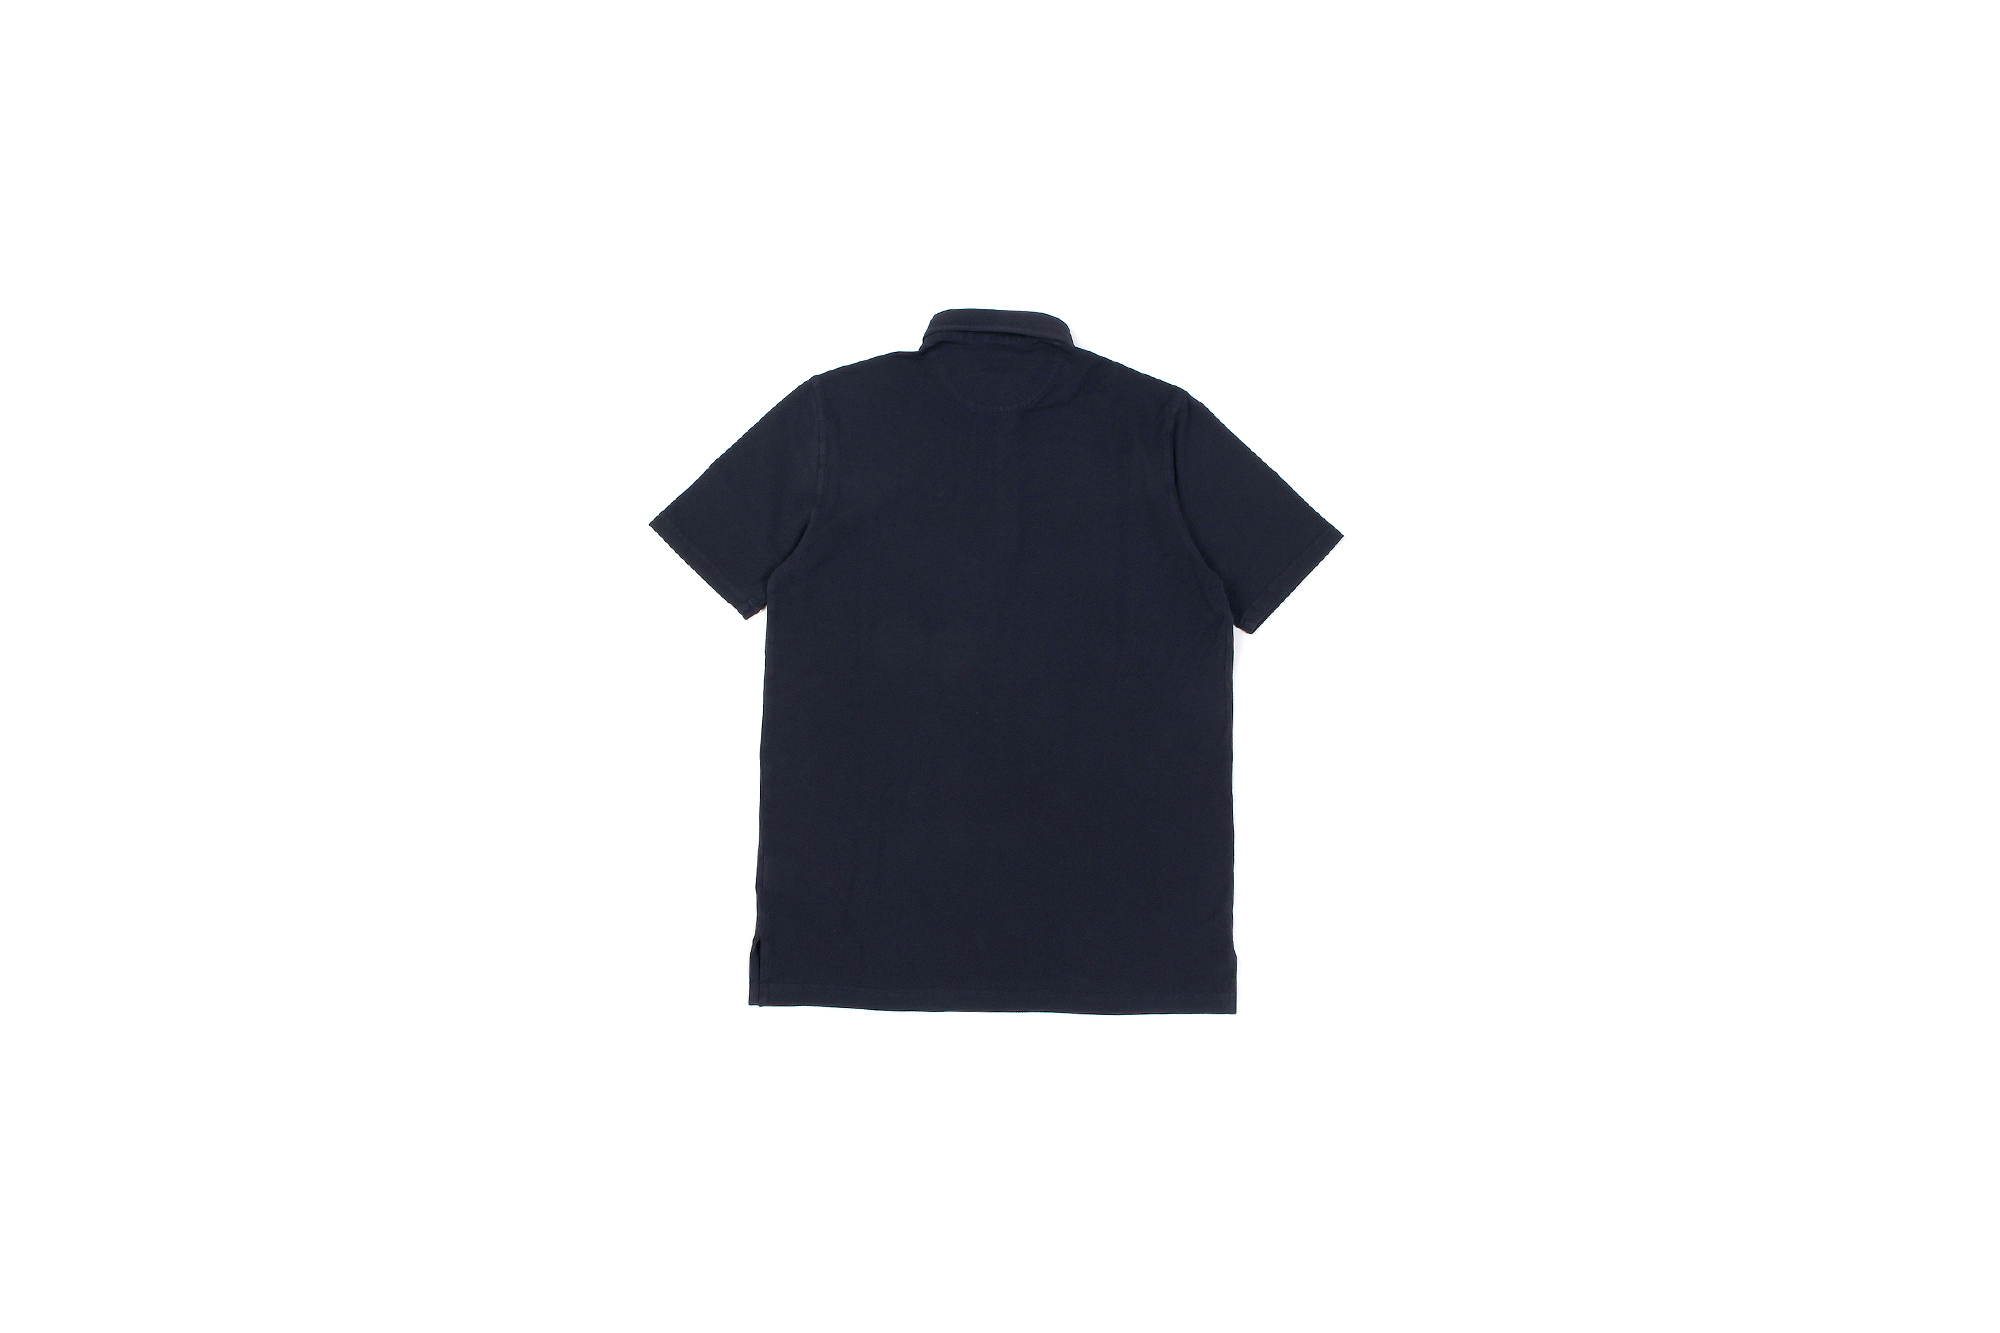 FEDELI(フェデーリ) Piquet Polo Shirt (ピケ ポロシャツ) カノコ ポロシャツ NAVY (ネイビー・626) made in italy (イタリア製)2020 春夏 【ご予約開始】愛知 名古屋 altoediritto アルトエデリット ポロ